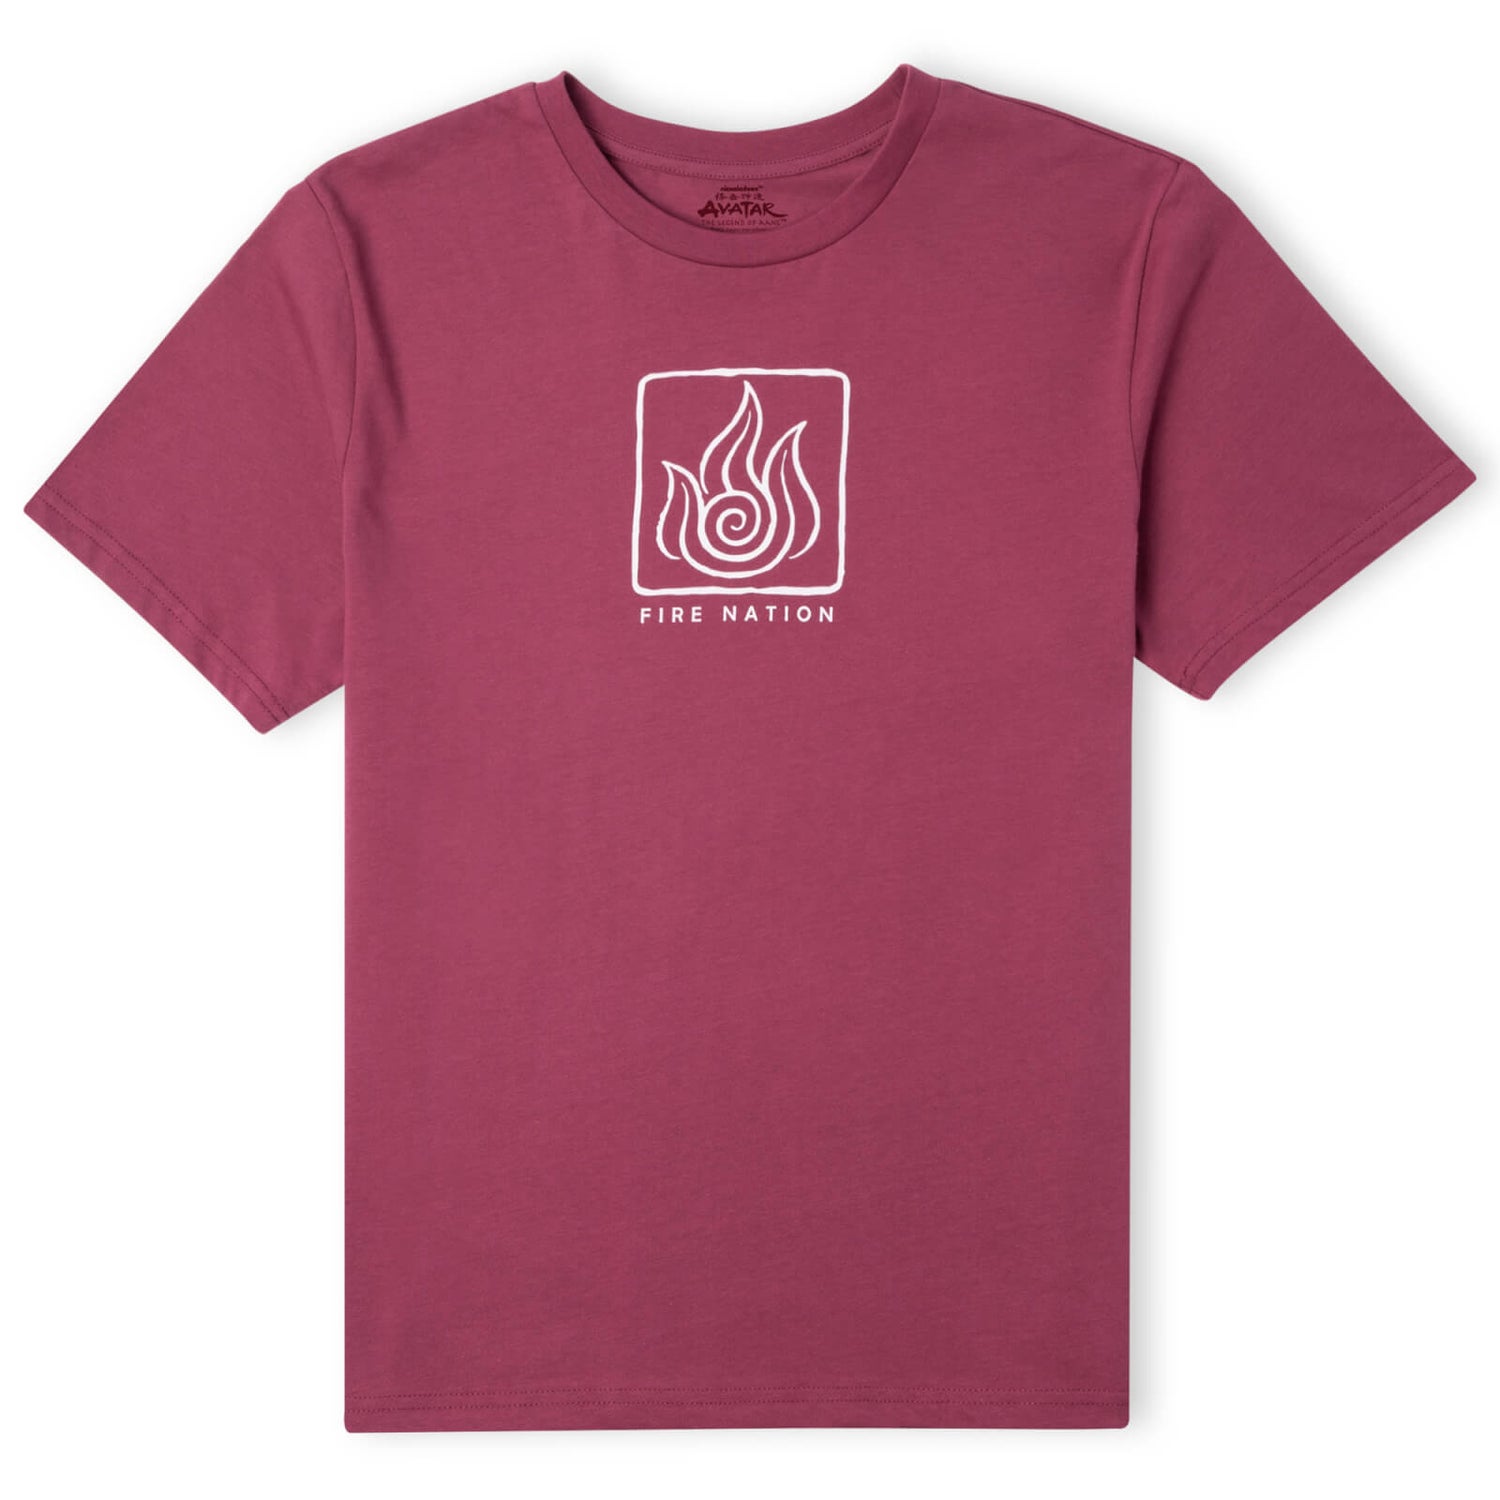 Avatar Fire Nation Unisex T-Shirt - Burgundy